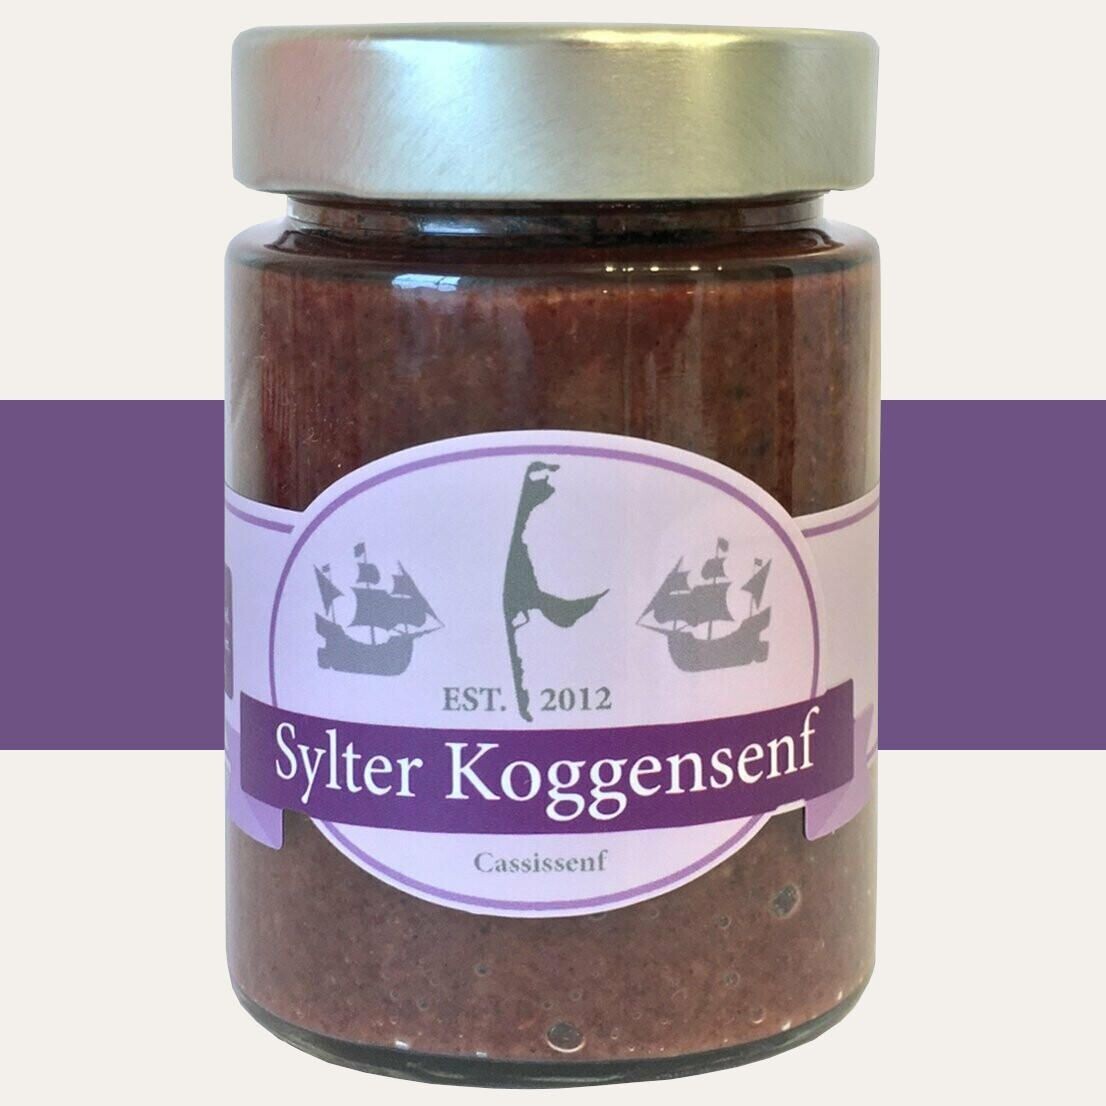 Sylter Koggensenf - Cassissenf